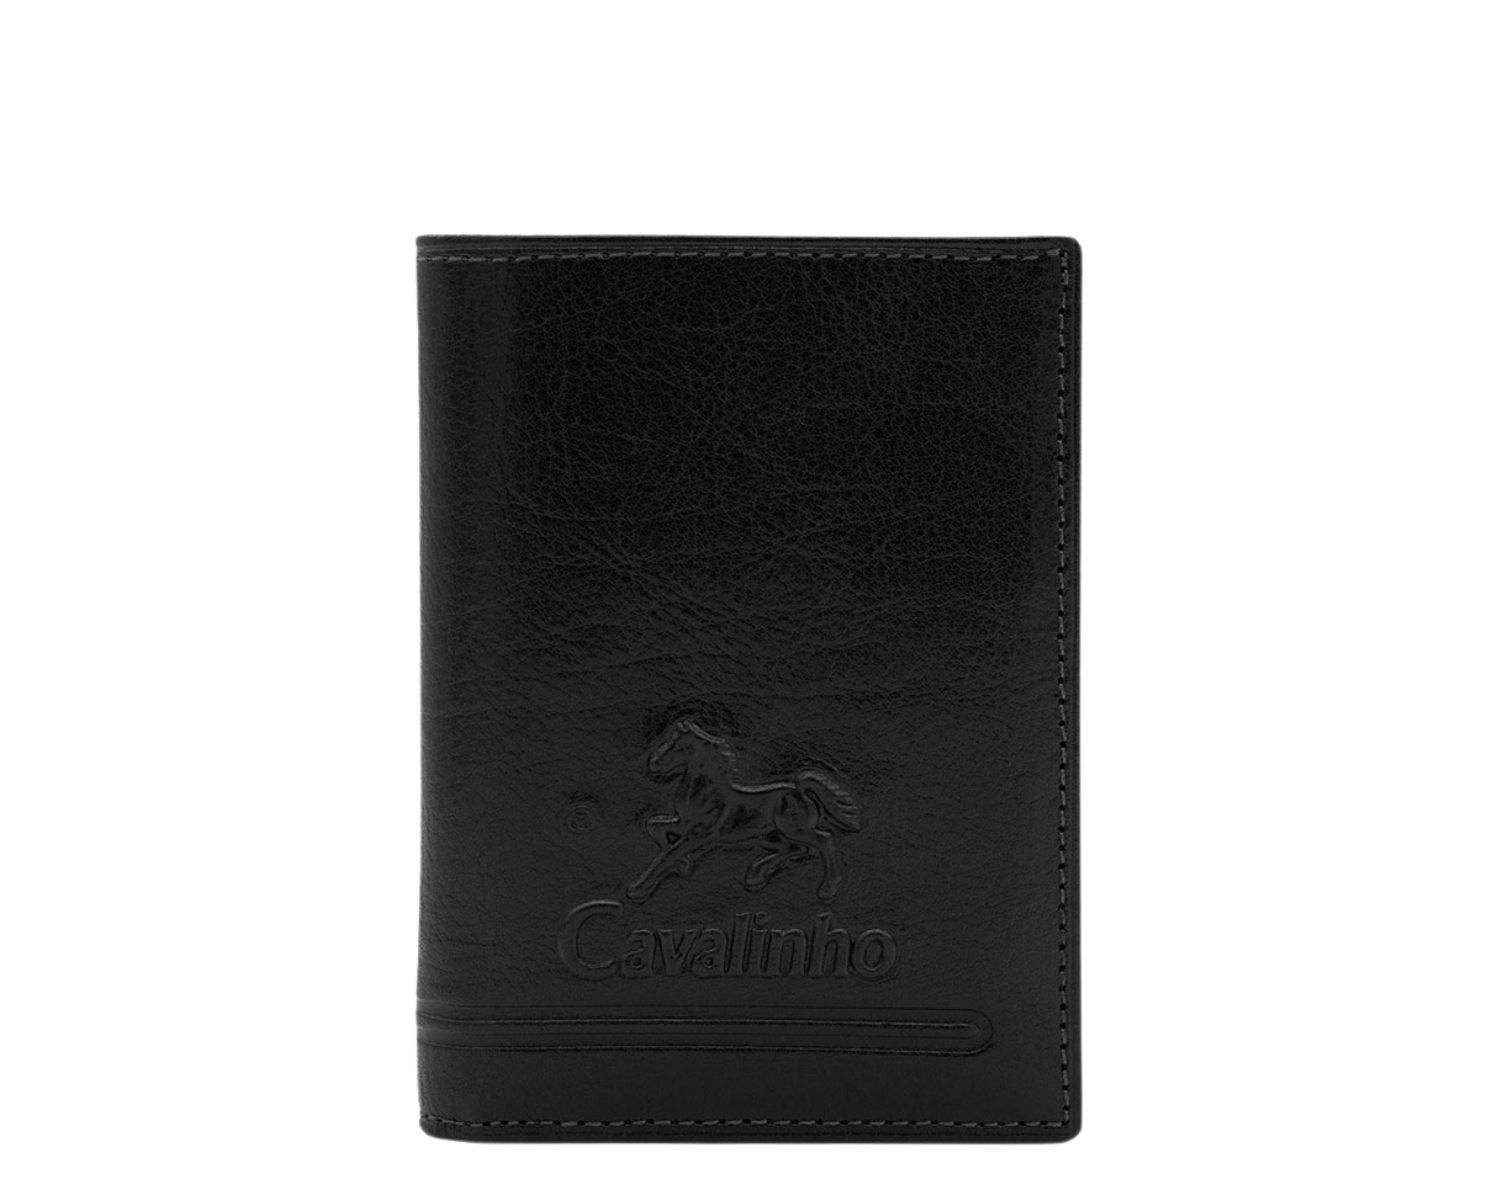 Cavalinho Men's Bifold Leather Wallet - Black - 28610552-black